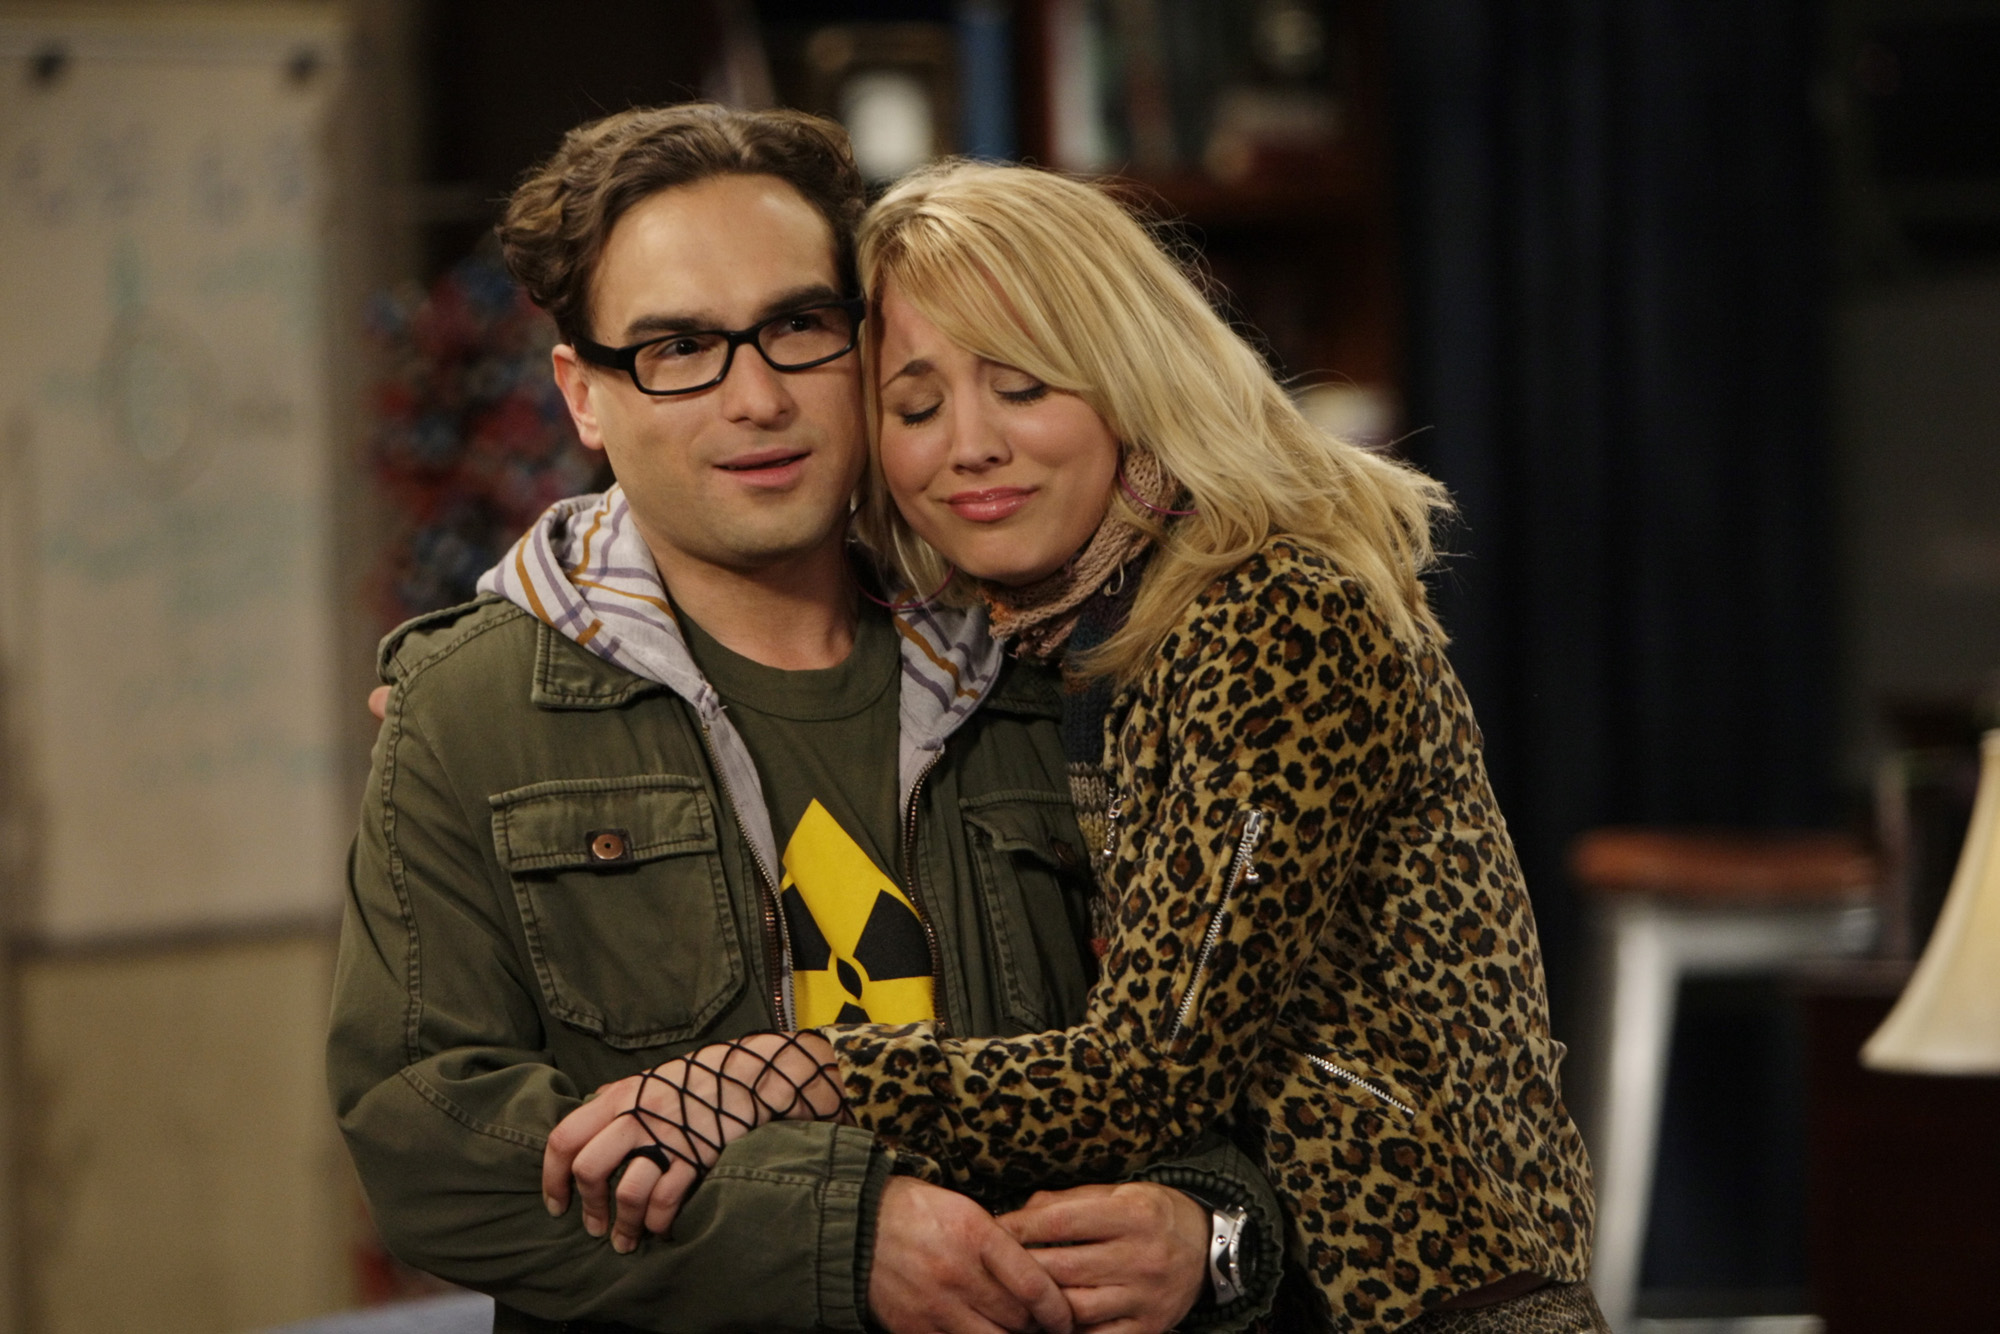 The Big Bang Theory (TV), Kaley Cuoco, Leonard Hofstadter, Johnny Galecki - desktop wallpaper